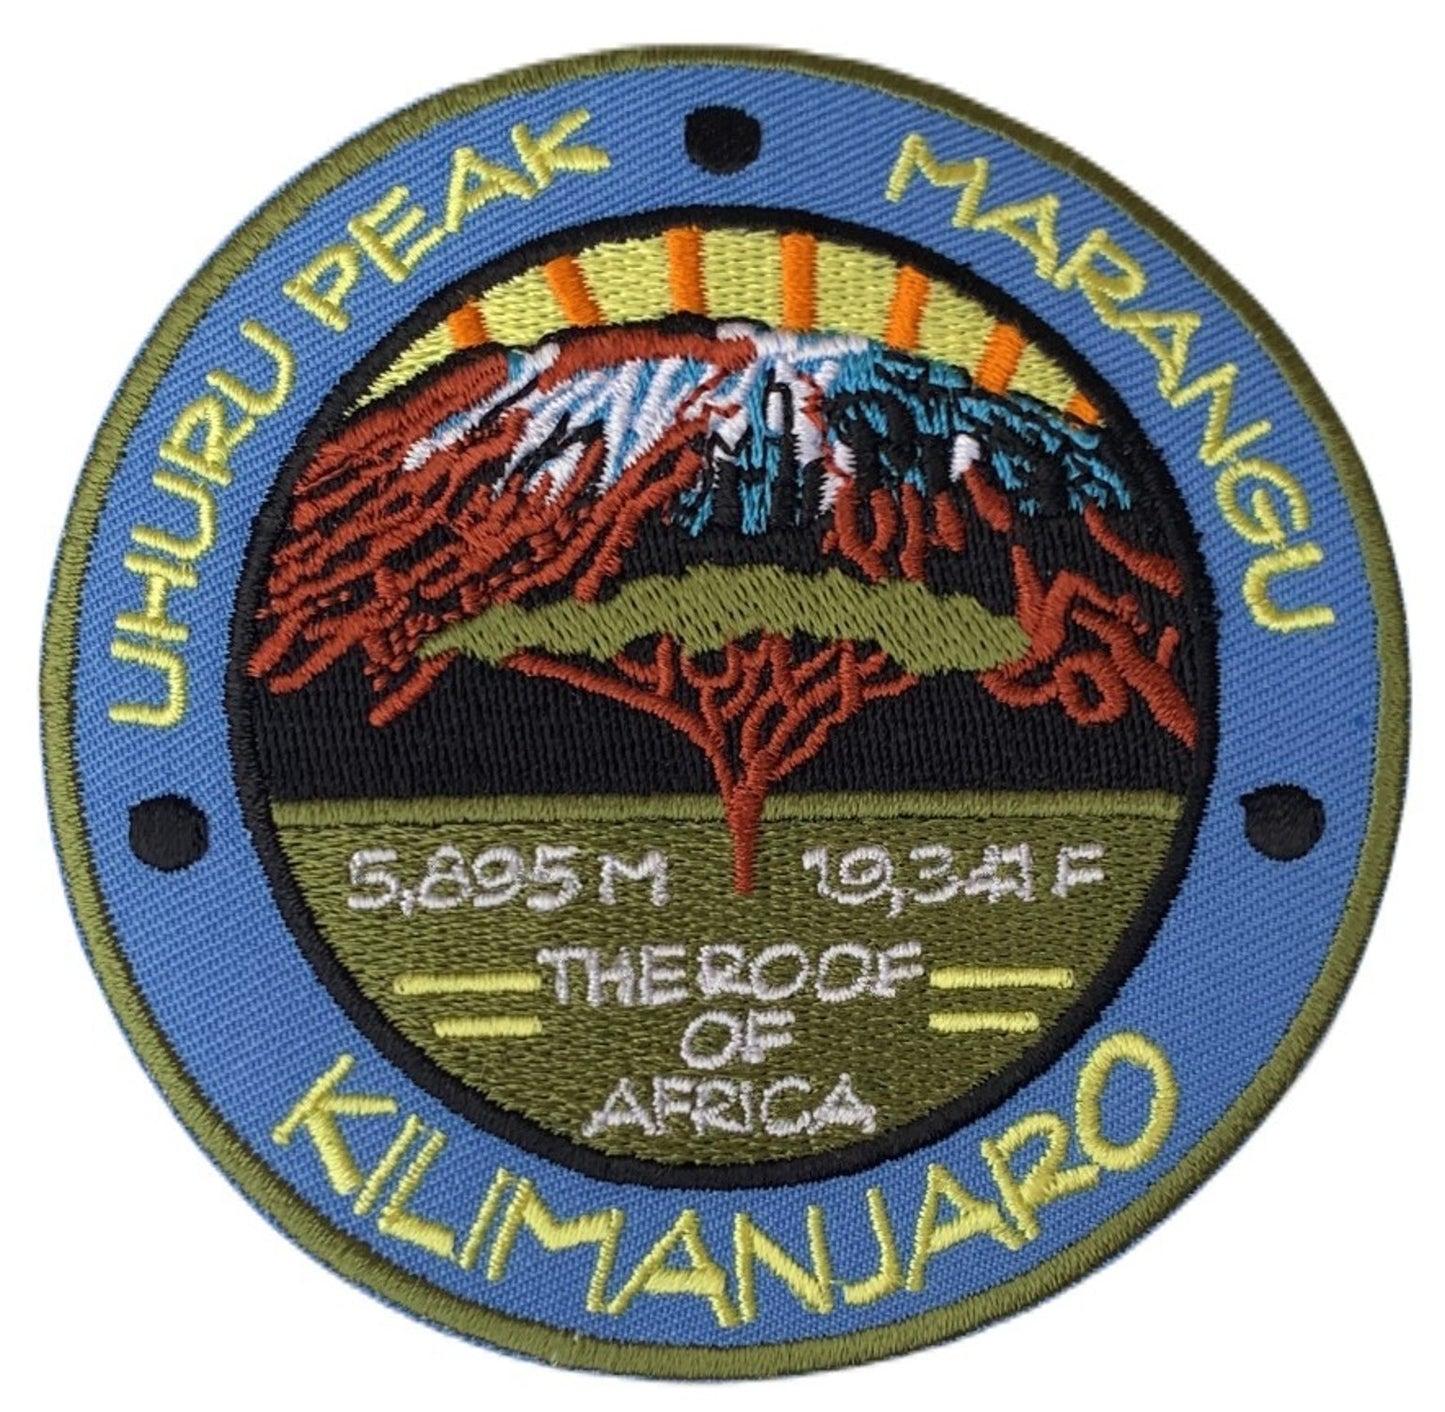 Mount Kilimanjaro Uhuru Peak Tanzania Marangu Route Patch (3.5 Inch) Iron-on or Sew-on Badge The Roof of Africa Souvenir Emblem Gift Patches